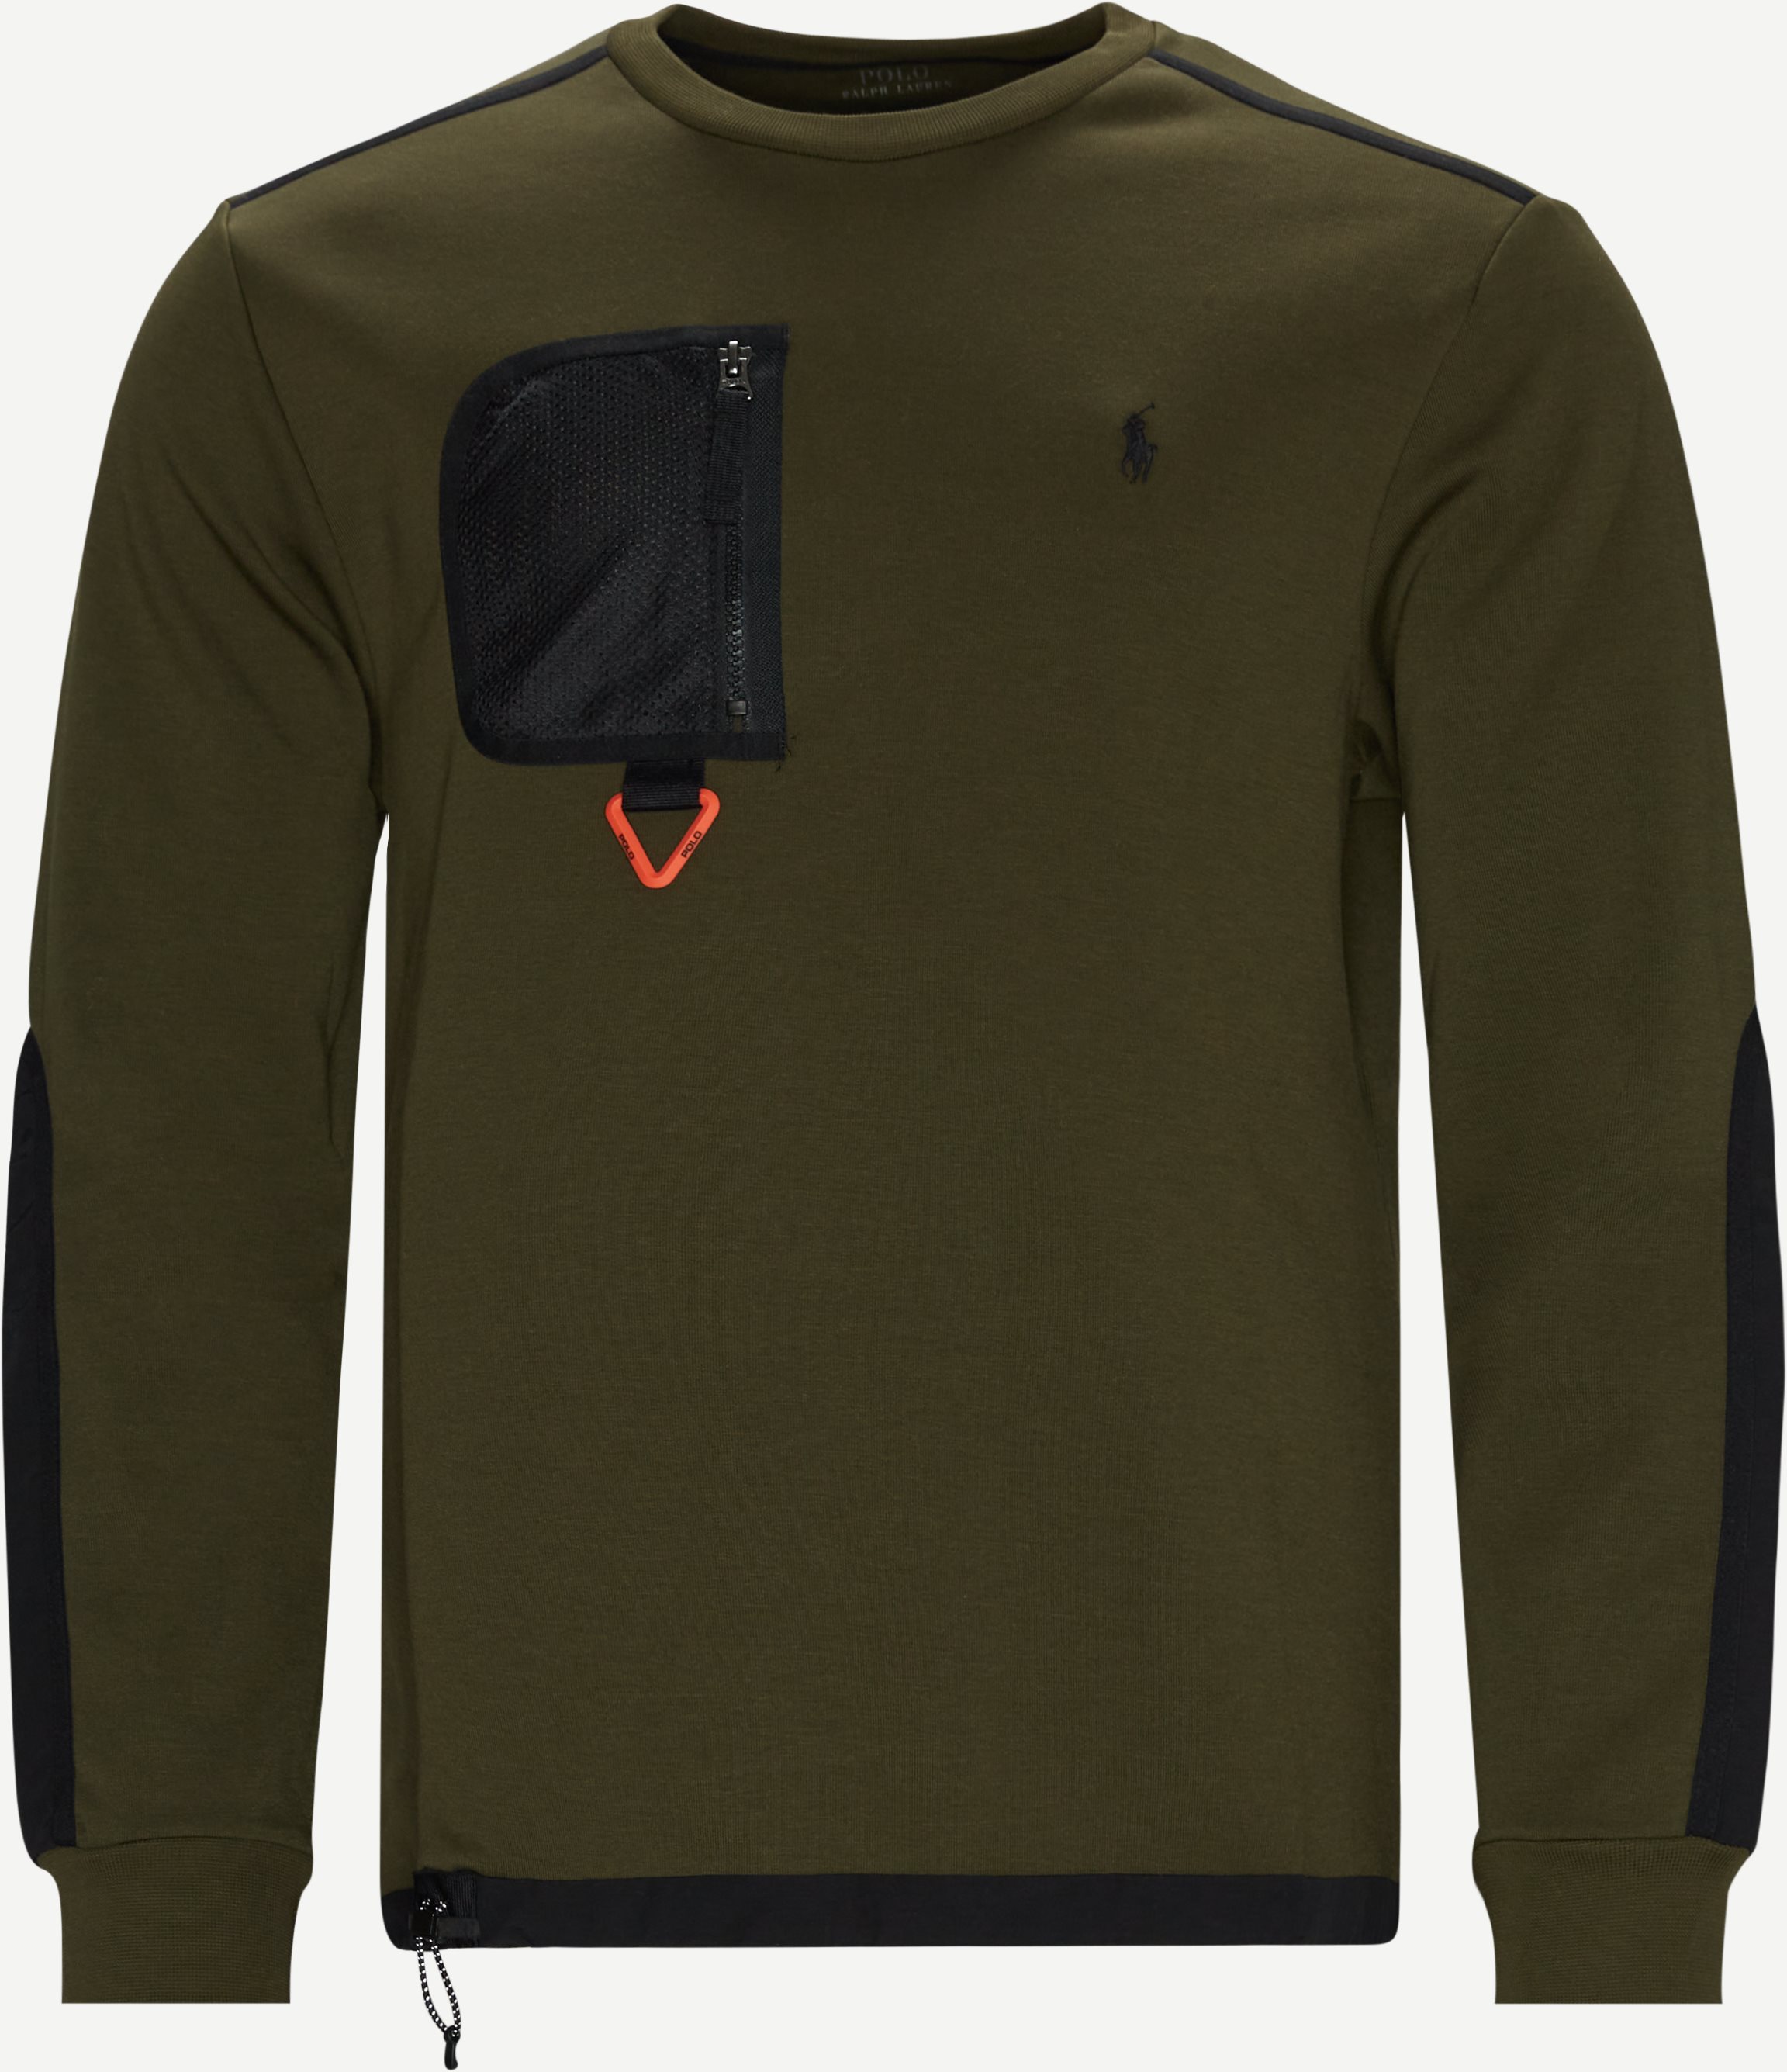 Company Athletic Sweatshirt - Sweatshirts - Regular fit - Army